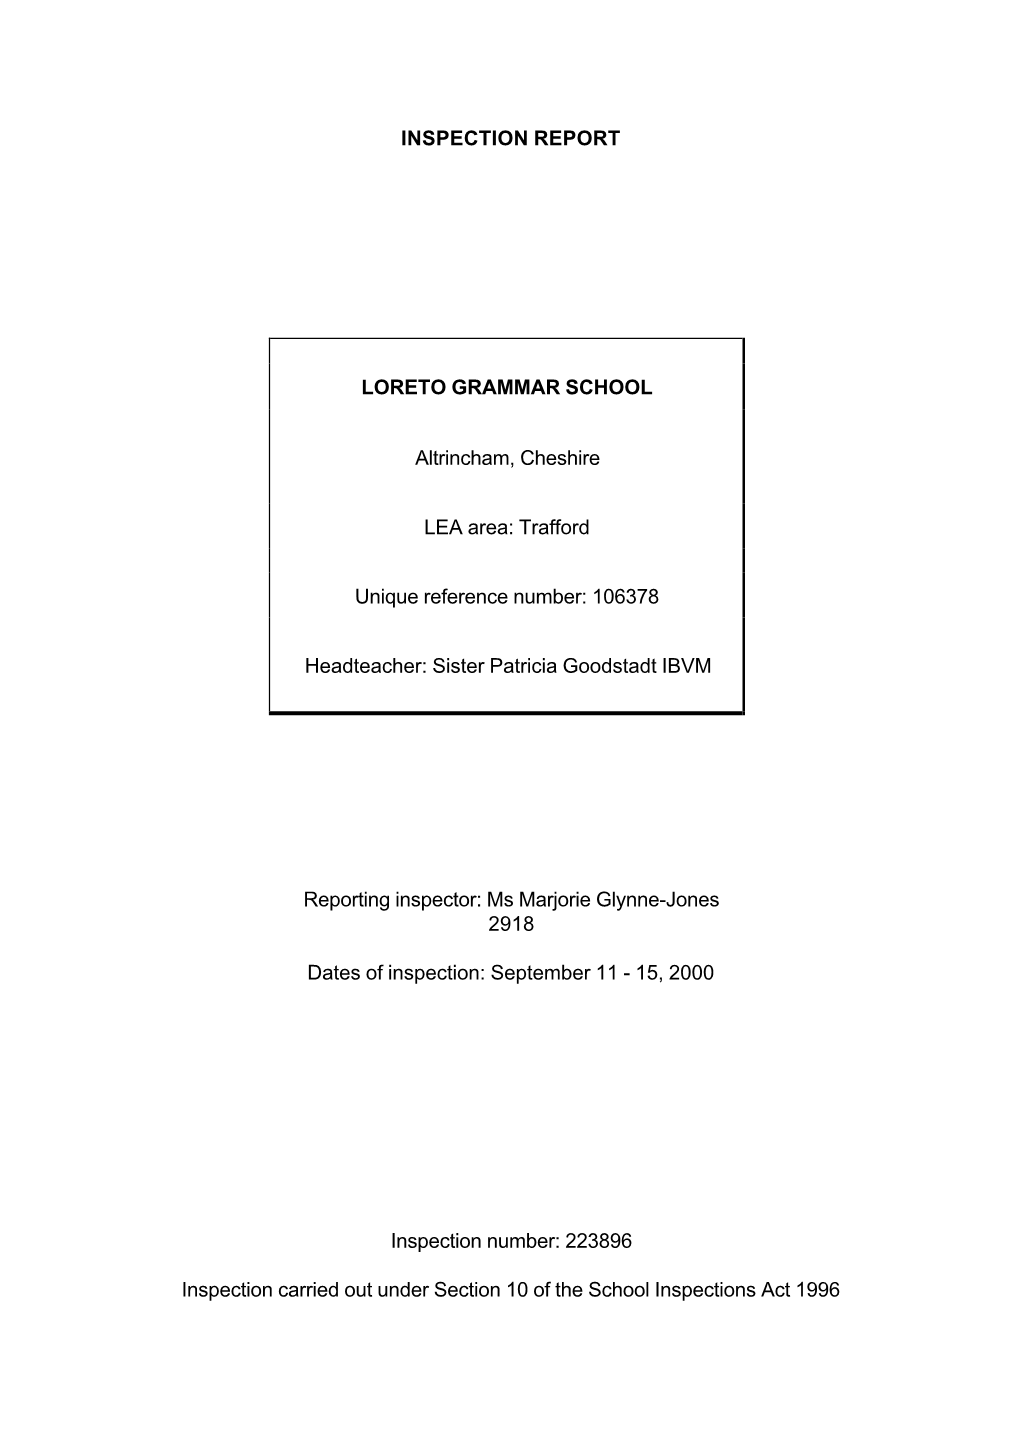 INSPECTION REPORT LORETO GRAMMAR SCHOOL Altrincham